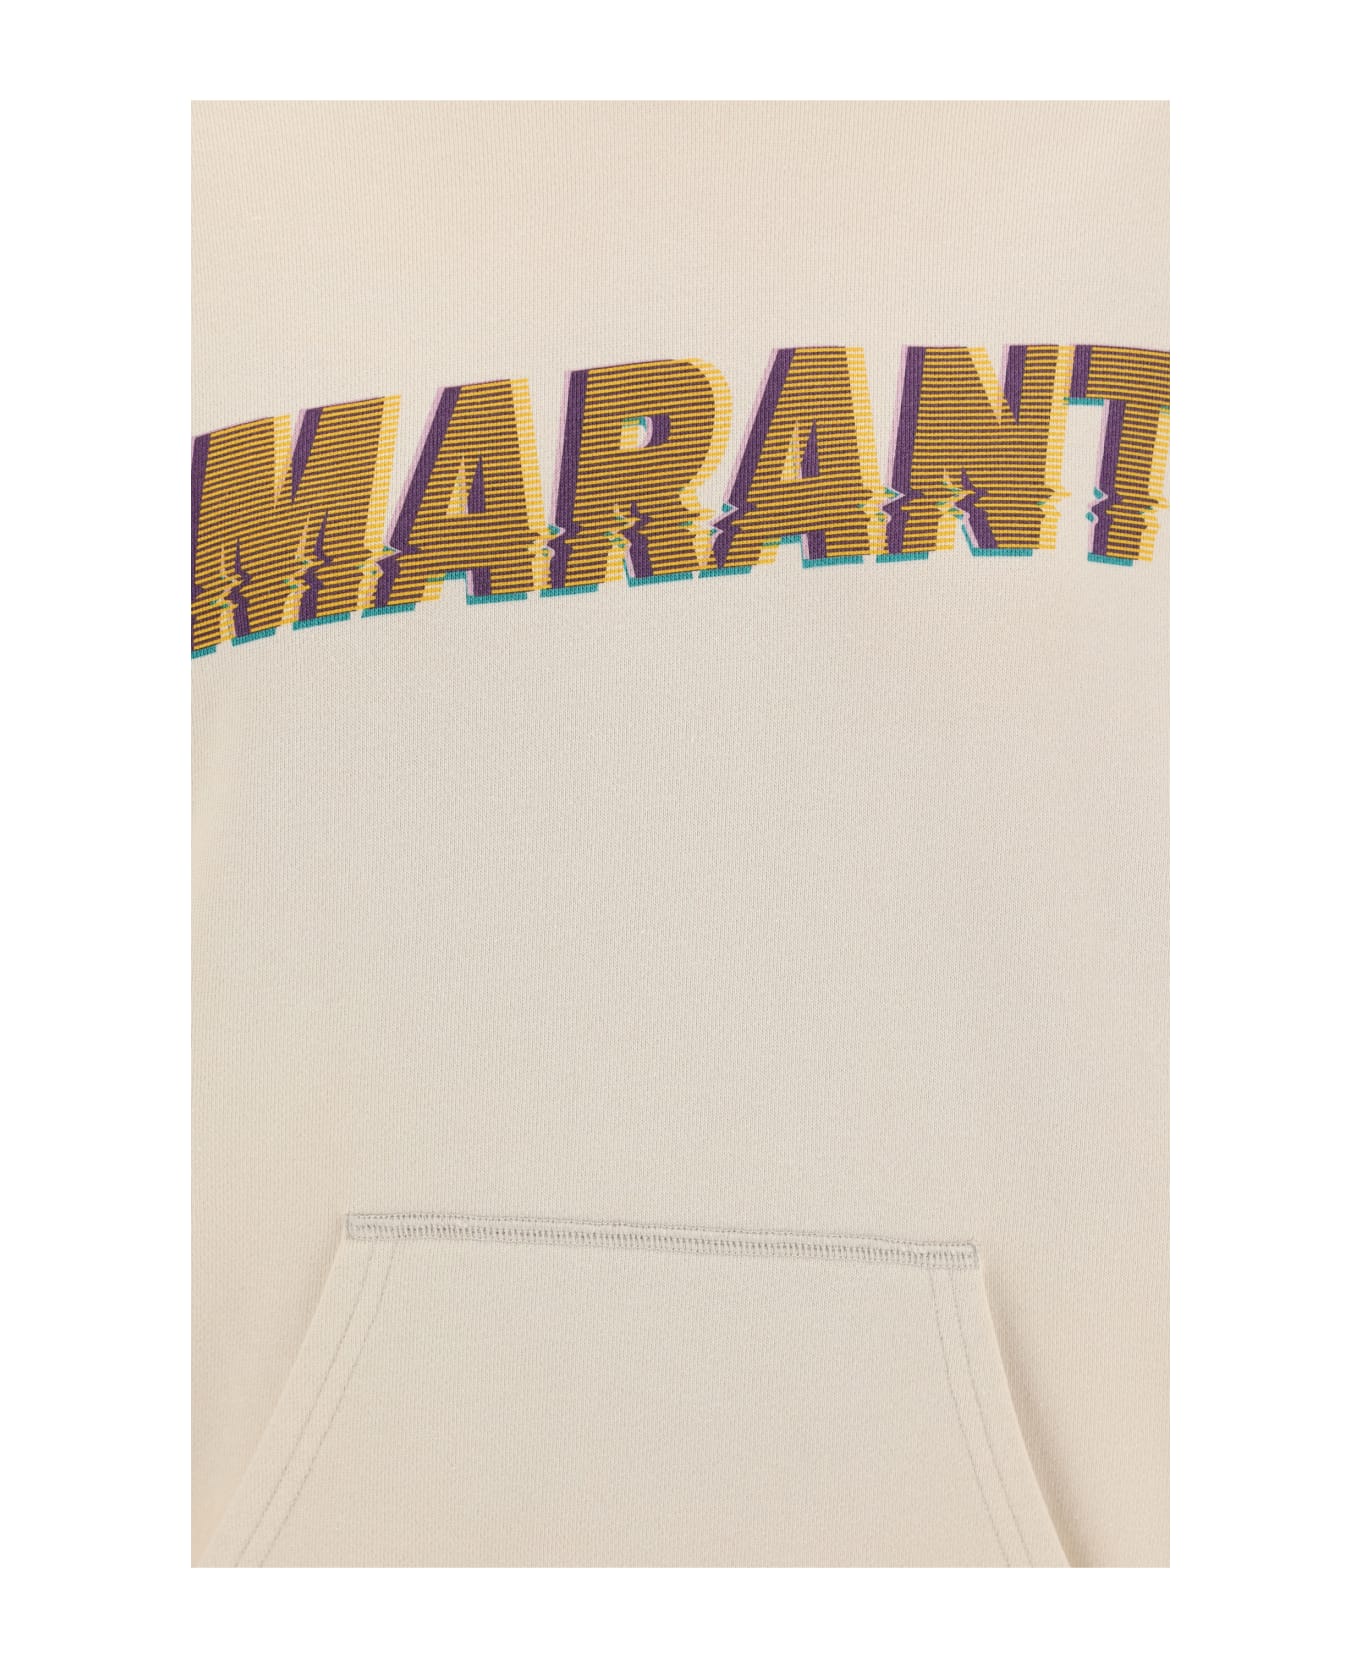 Marant Étoile Cotton Mansel Hooded Sweatshirt - Ecru/orange フリース